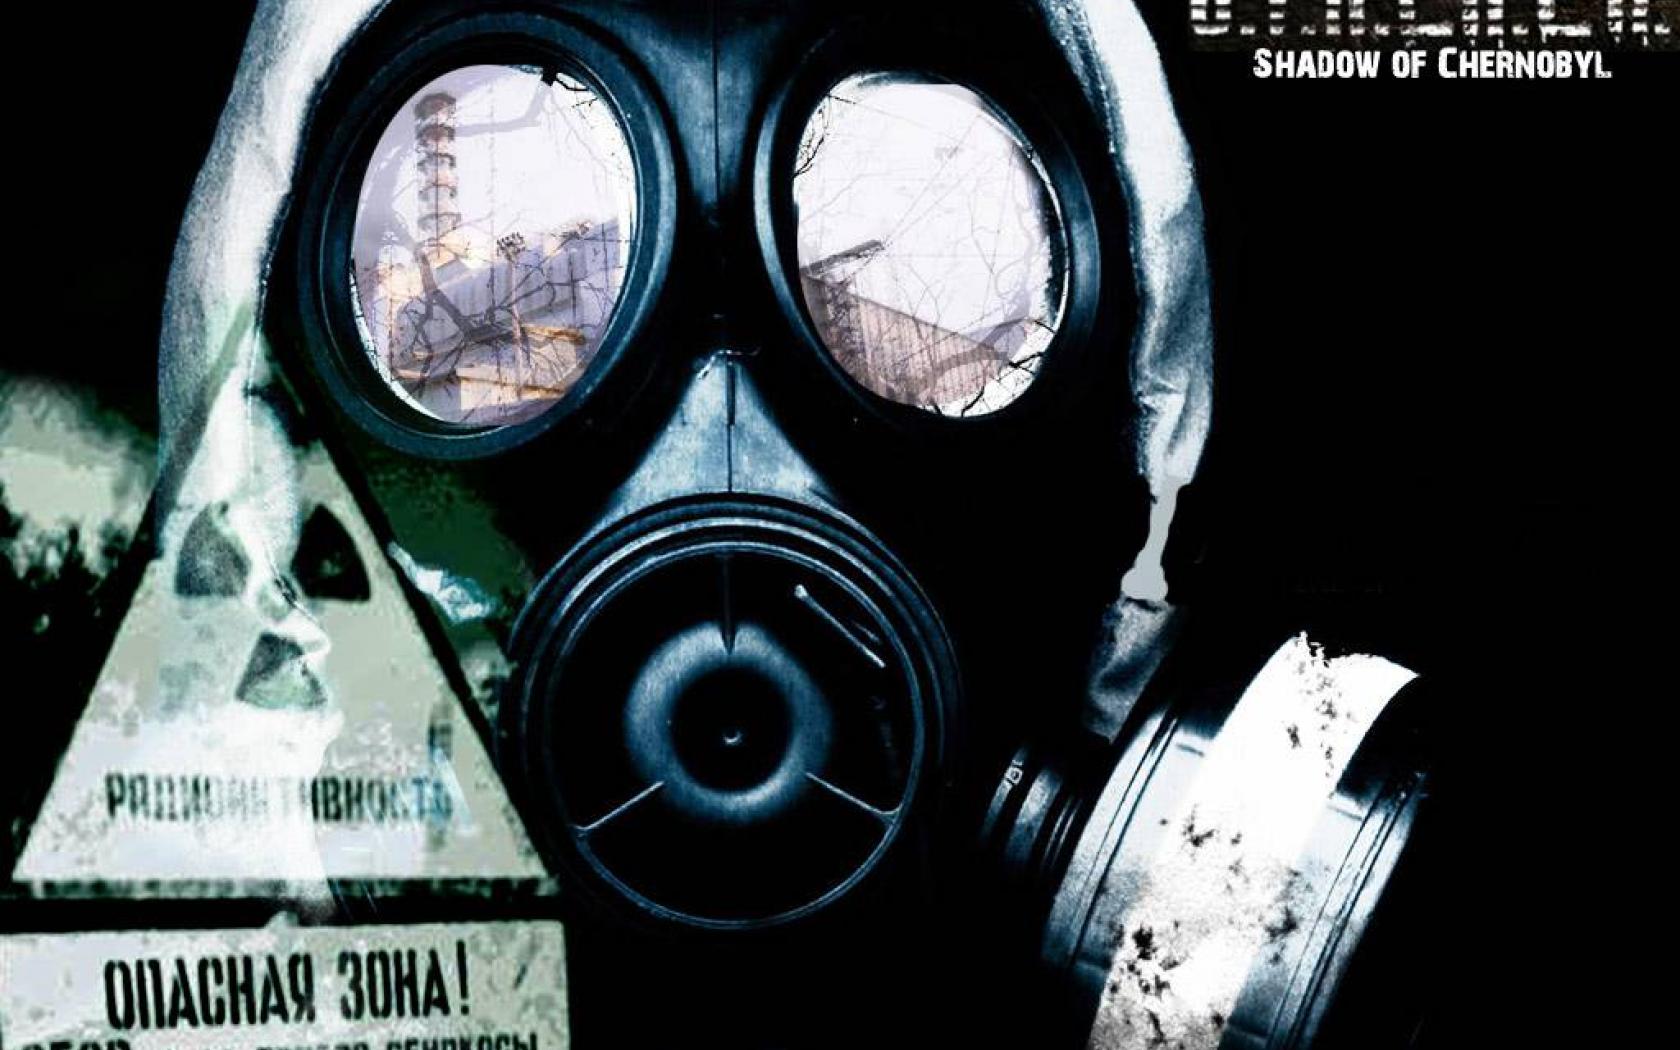  gas mask stalker shadow of chernobyl wallpaper HQ WALLPAPER   8866